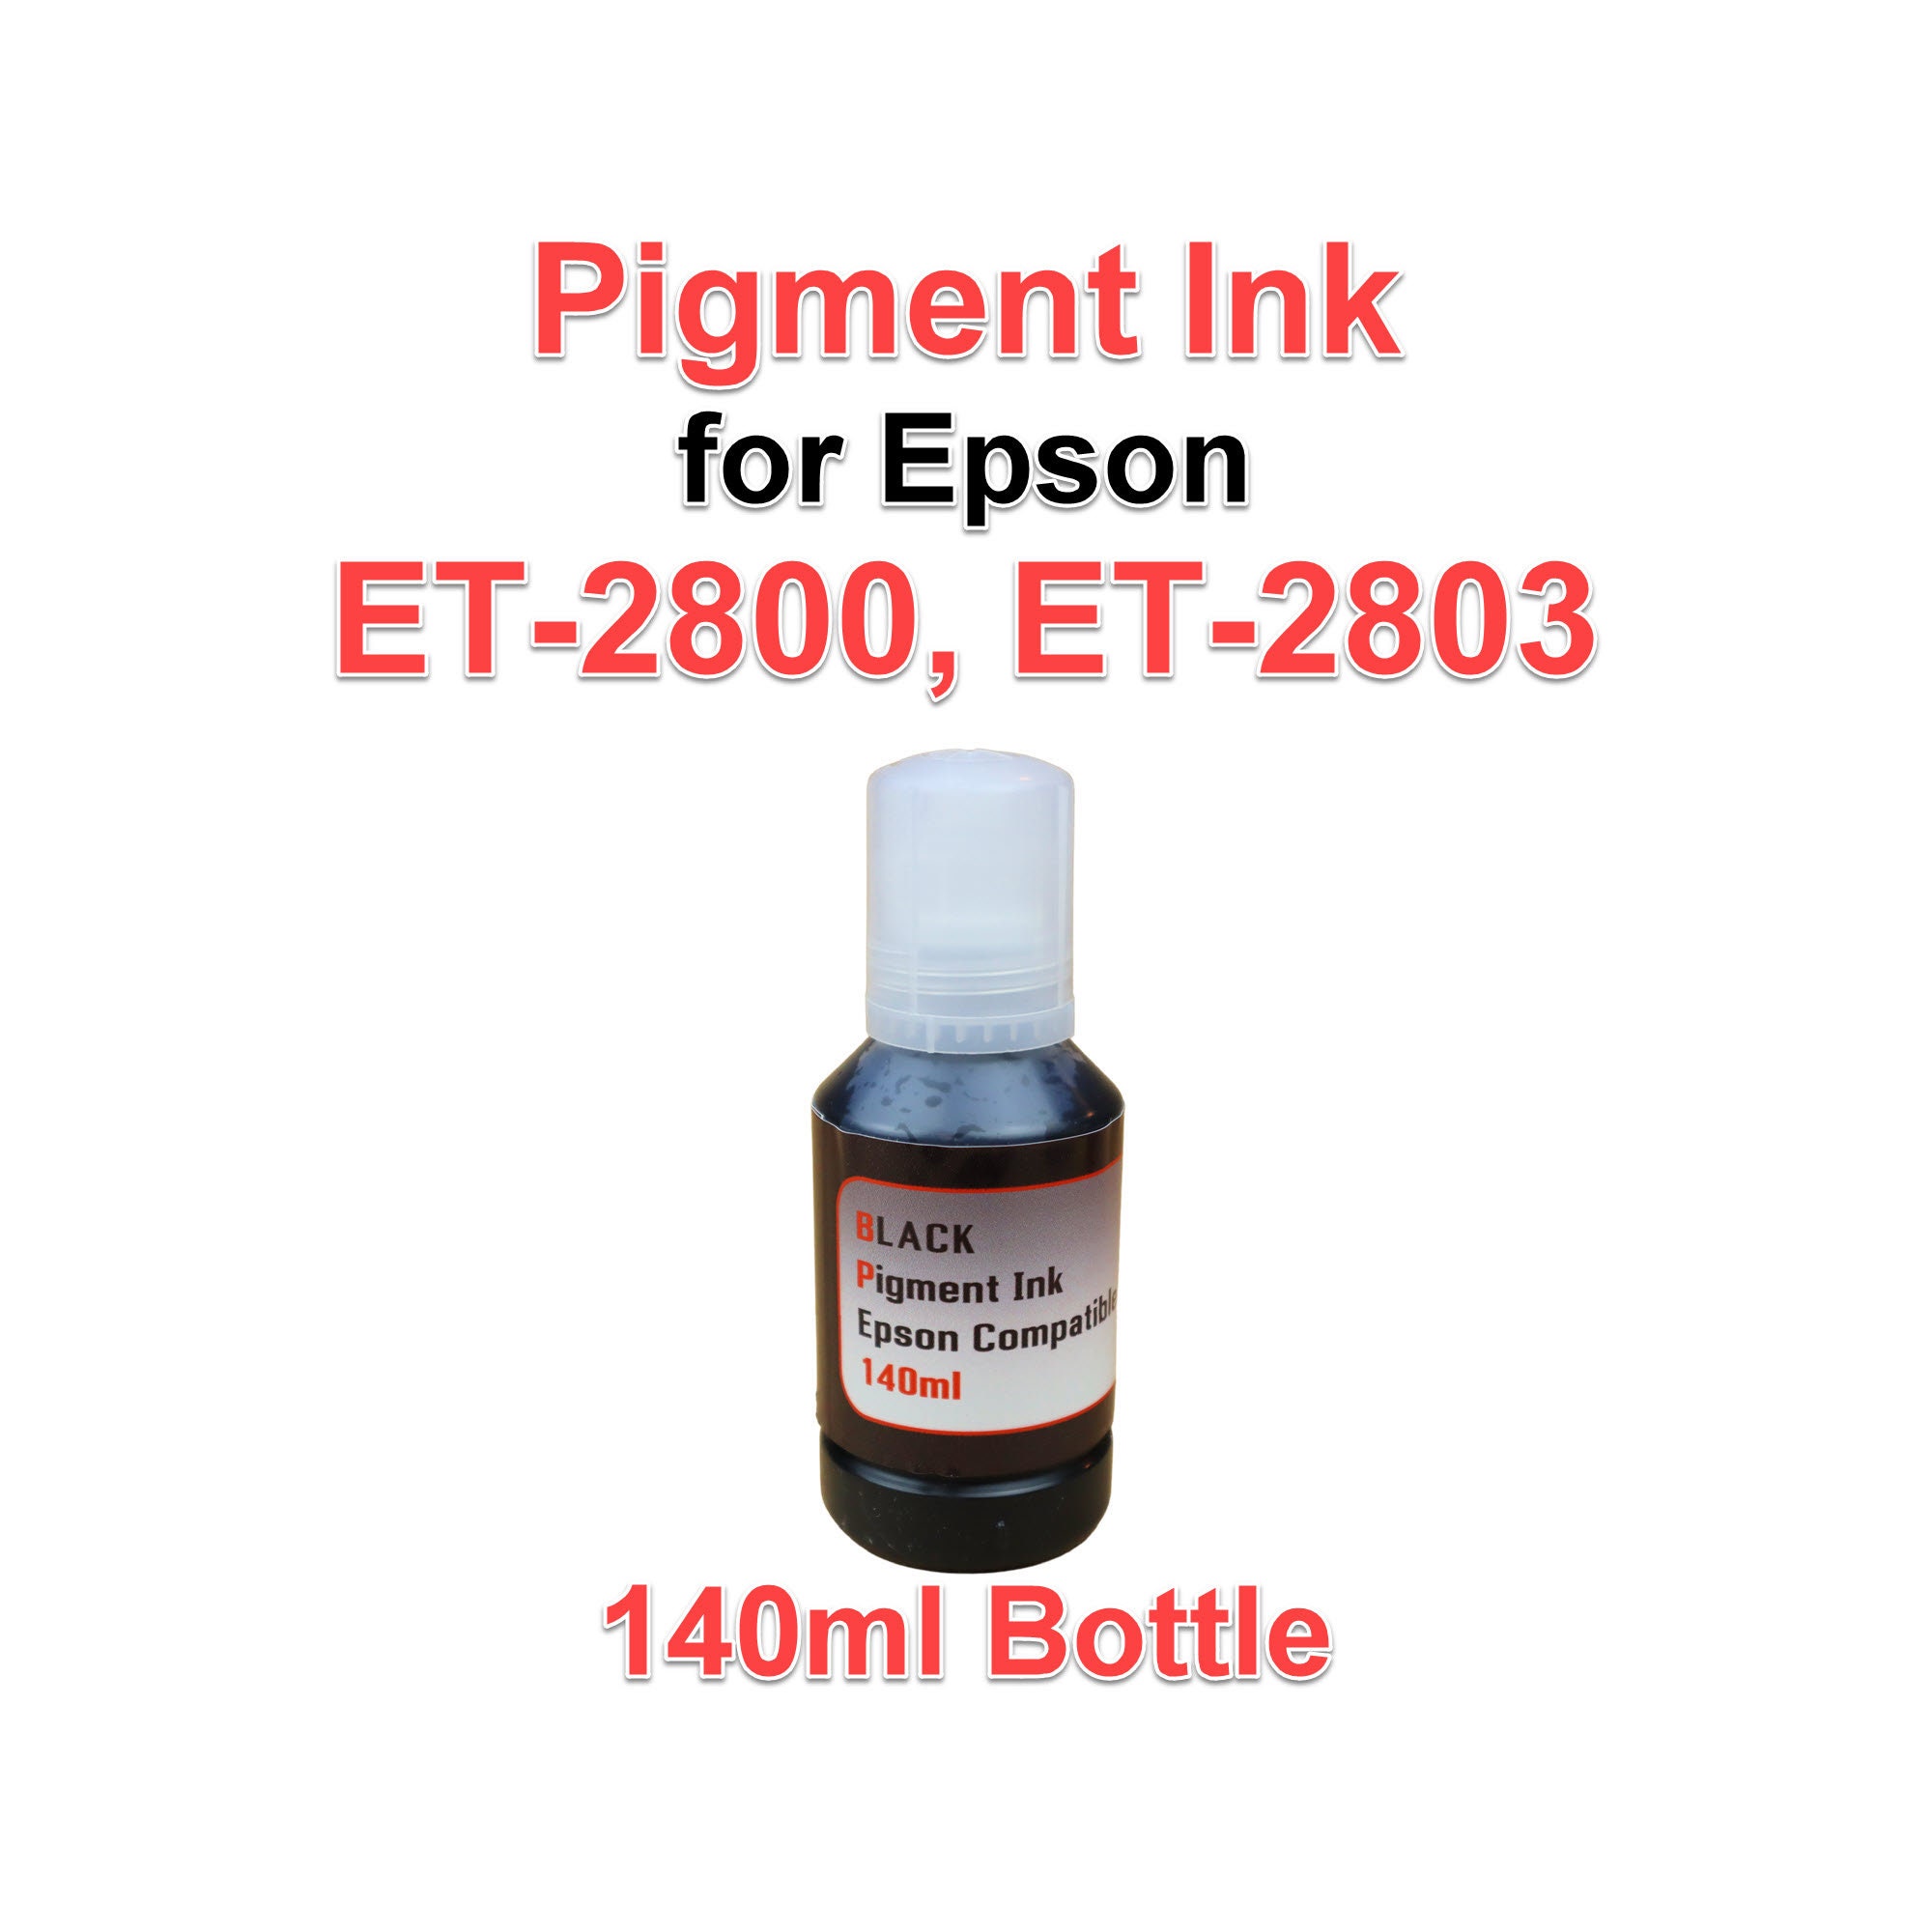 Epson SC F170 Dye Sublimation Printer Ecotank Refillable w/2 Sets of Inks  Free Thermo Tape & Epson Paper Original Brand New W/warranty 